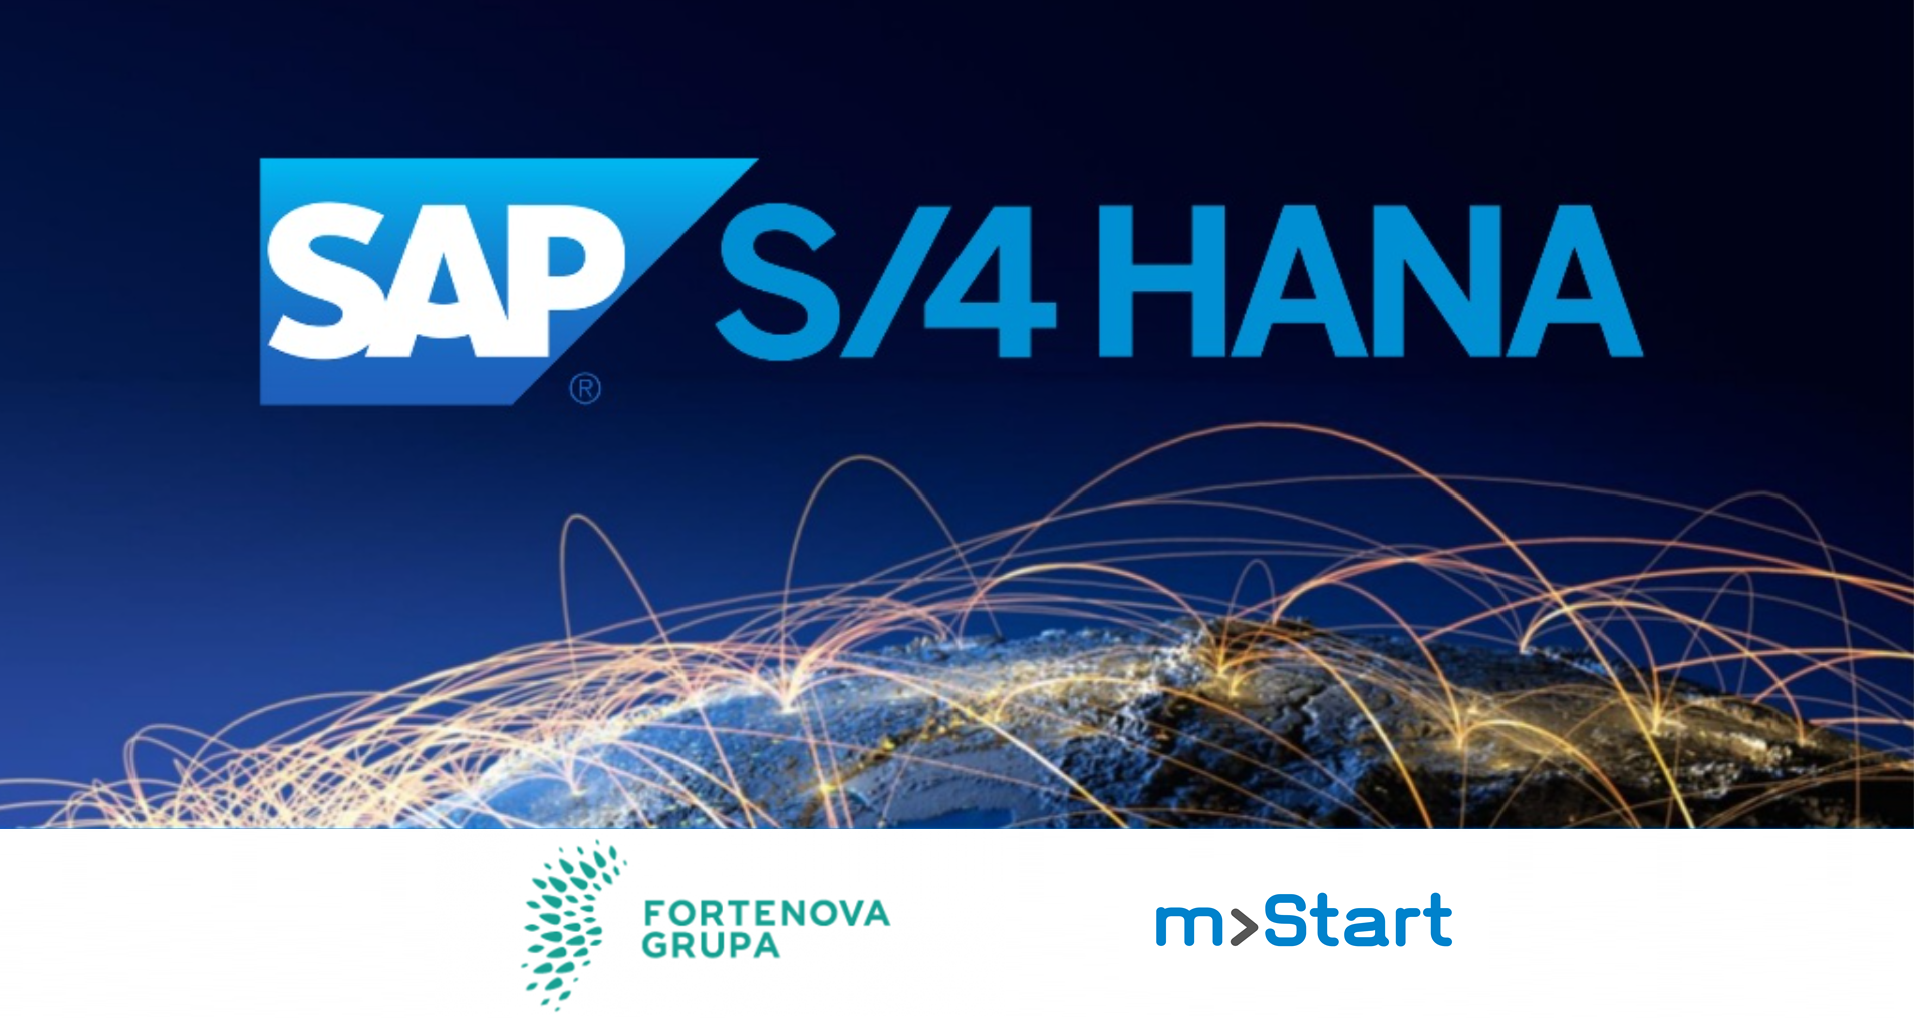 Сап приветствие. SAP хана. SAP 4 Hana. SAP Hana логотип. Картинка SAP s4 Hana.